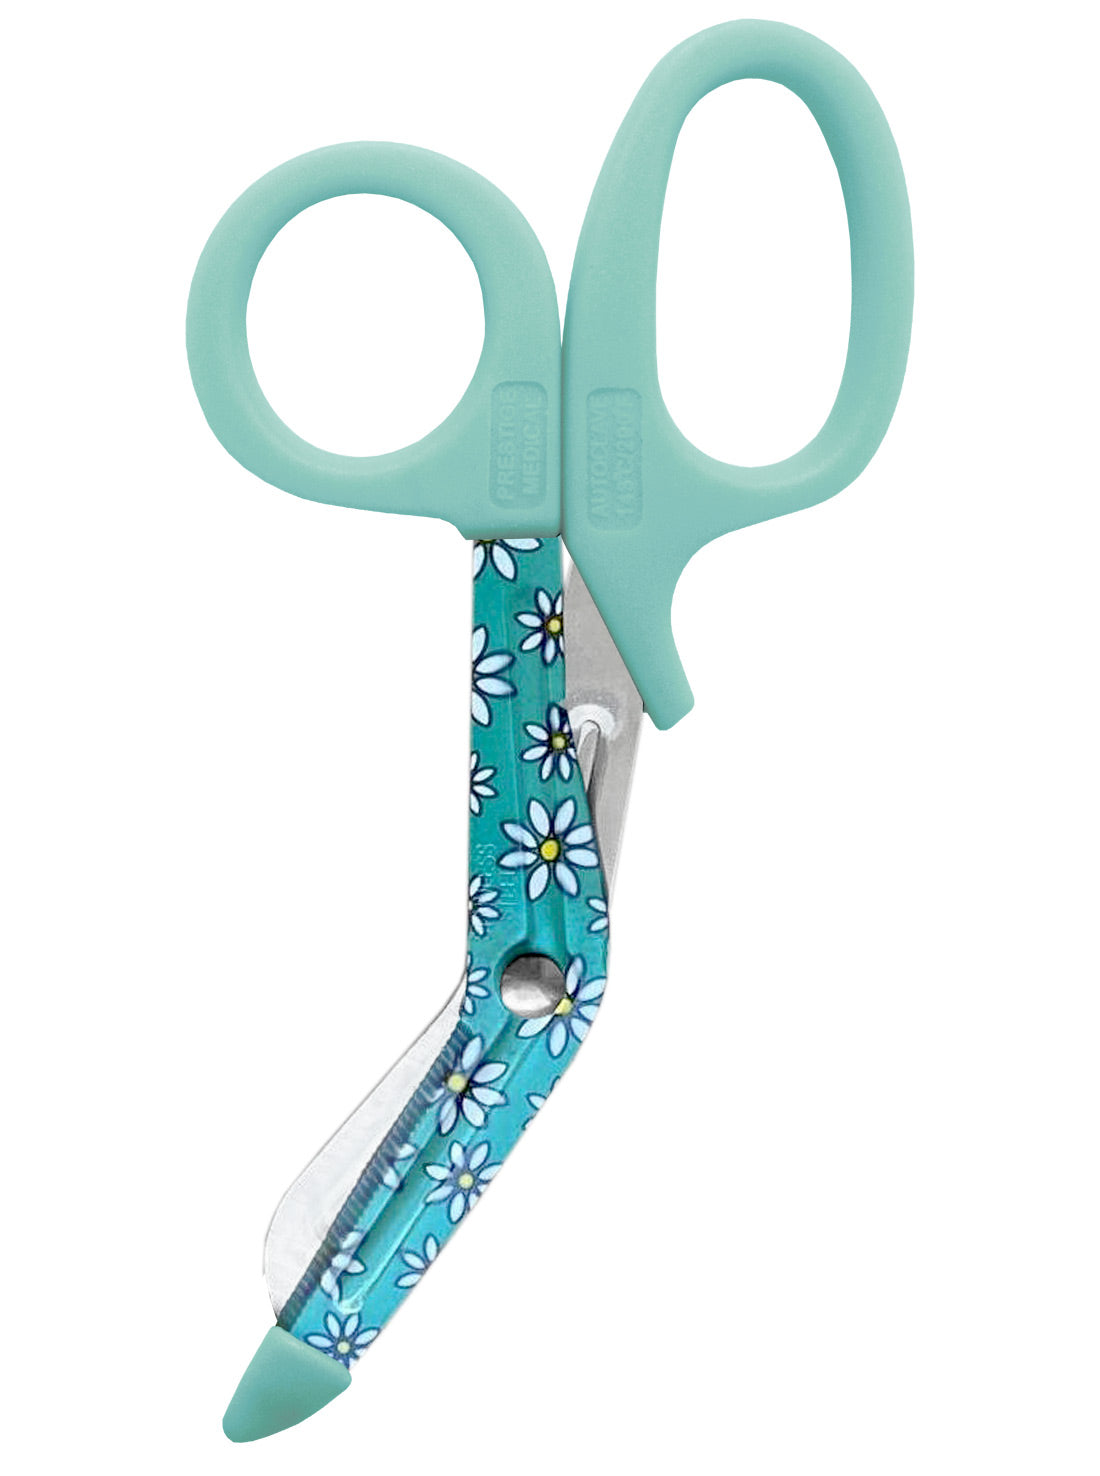 5.5" StyleMate Utility Scissor  by Prestige / Daisies Aqua Sea